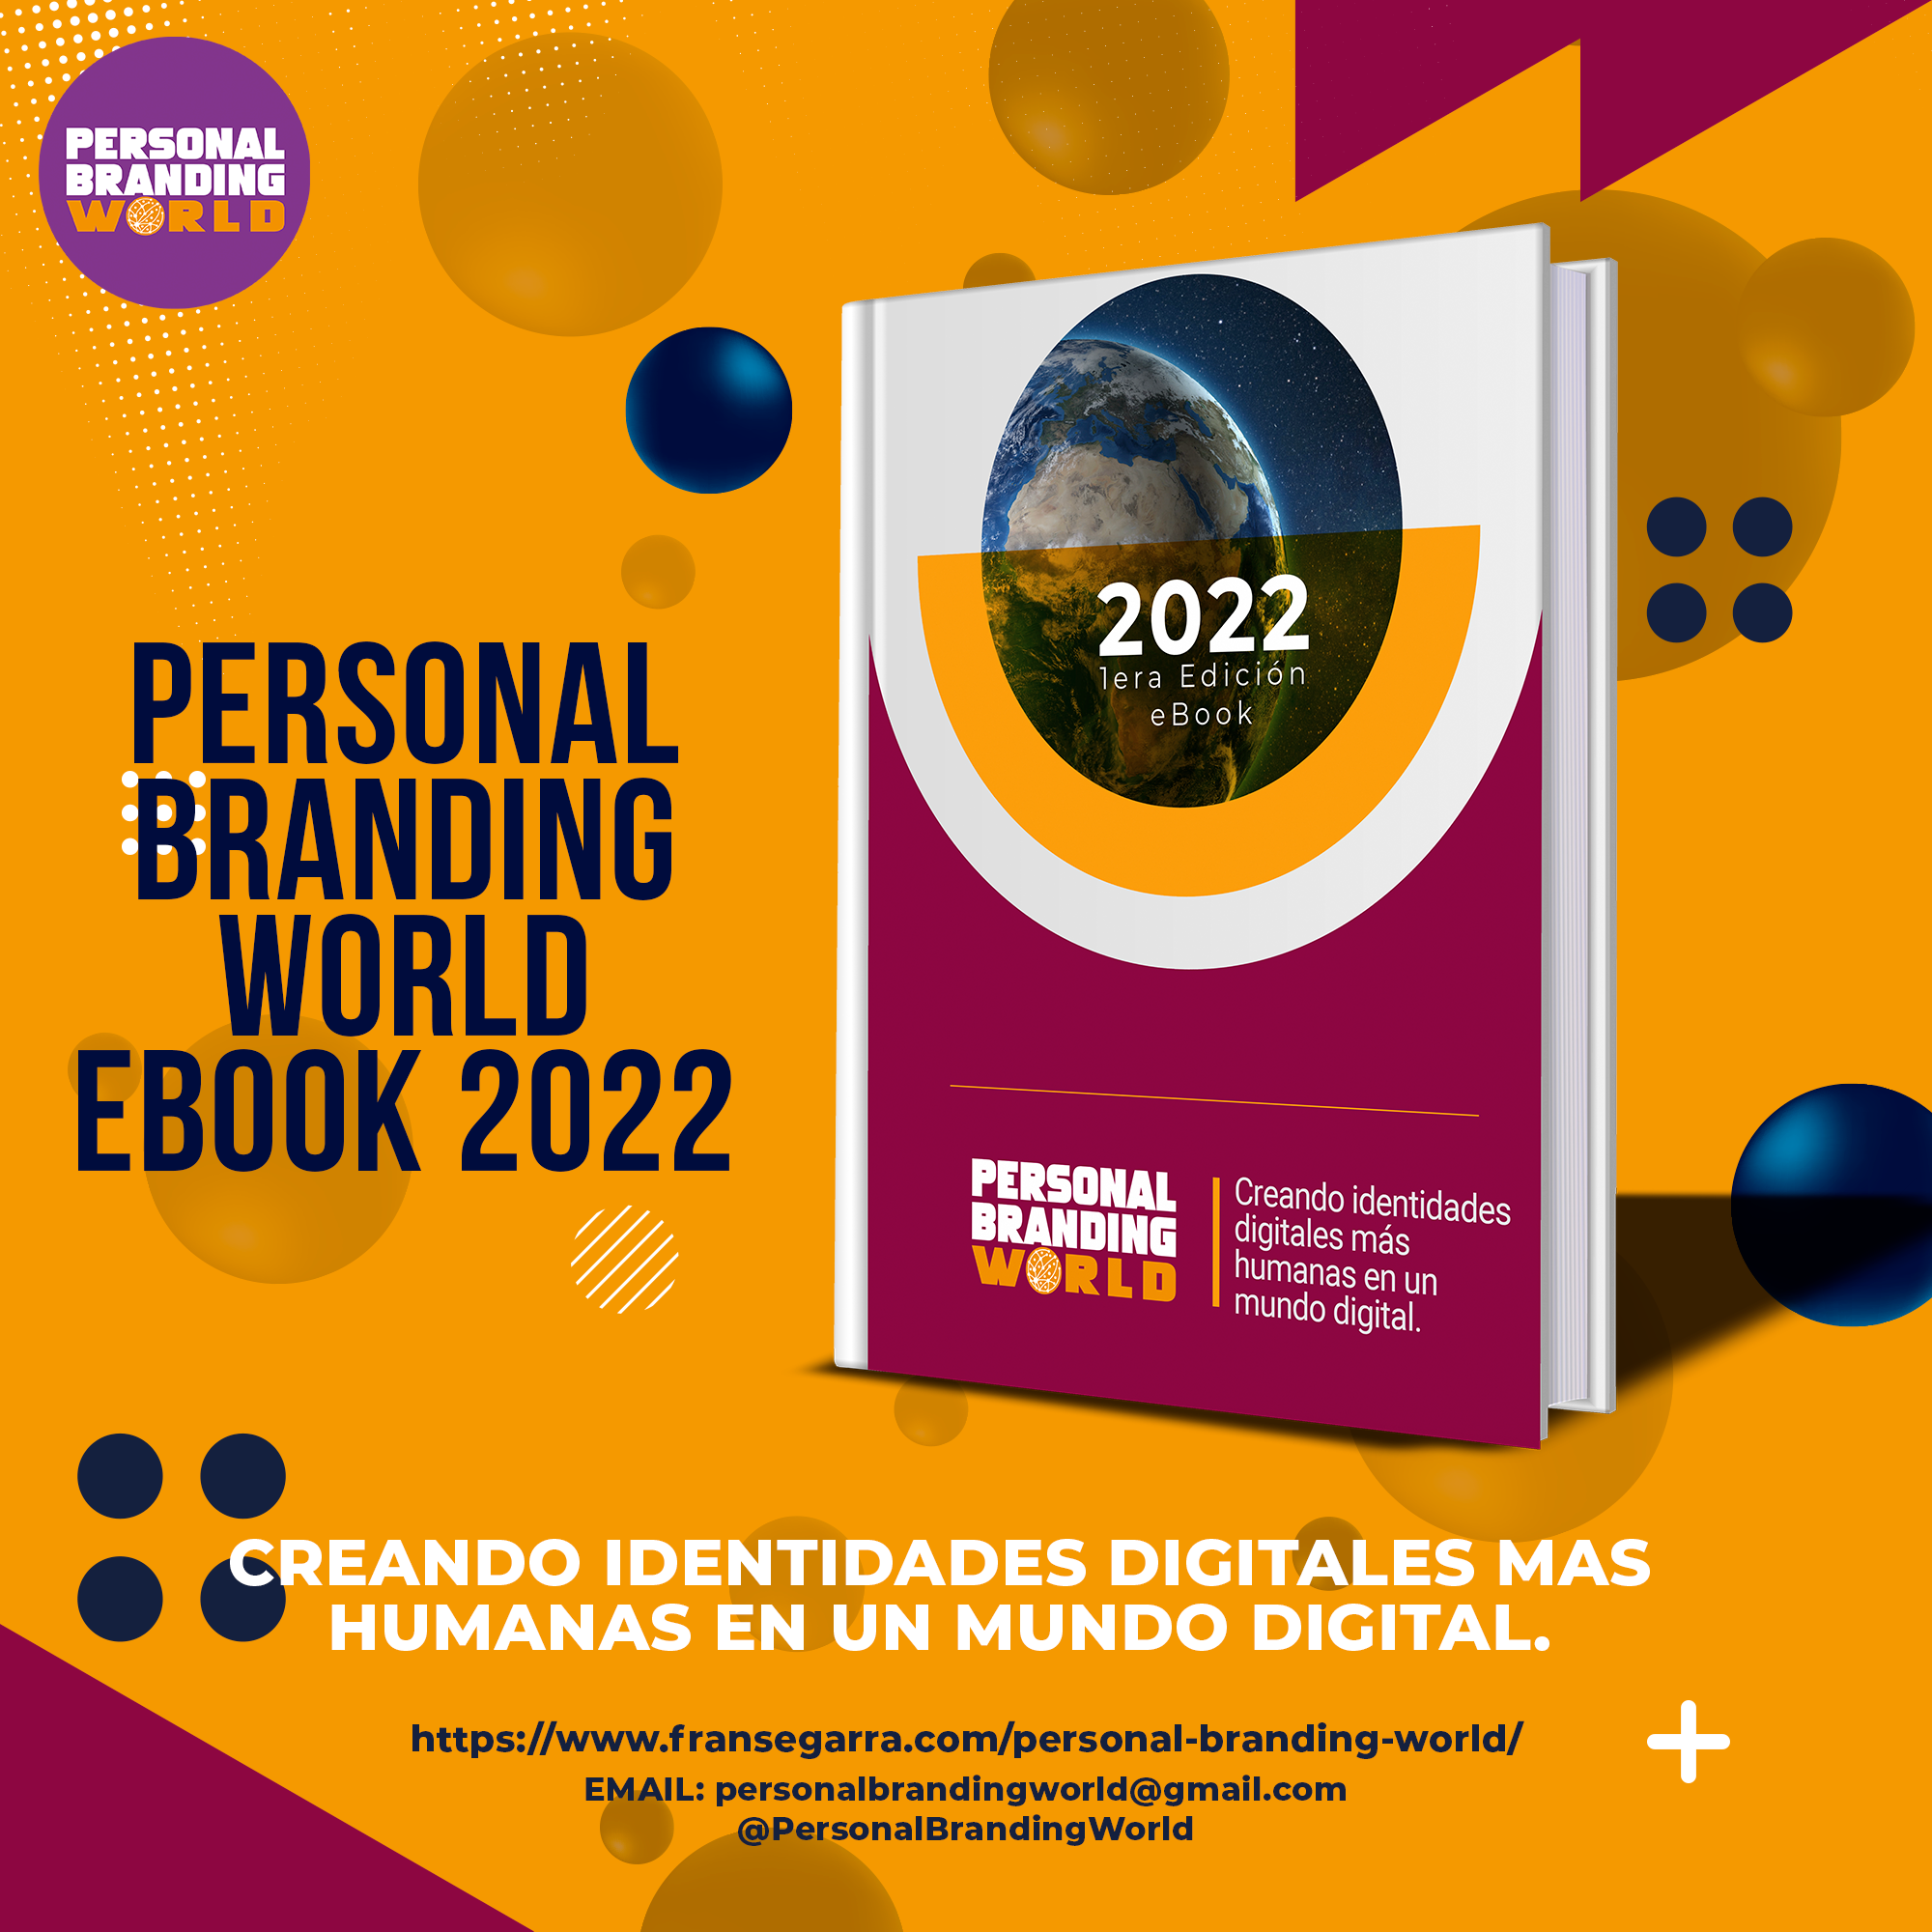 PERSONAL | i
BRANDING
WORLD
EBOOK 2022

Creando id

pie [ il
eves oi Ty
mundo digital.

 

0
66

  
 
 

https://www.fransegarra.com/personal-branding-world/

EMAIL: personalbrandingworld@gmail.com
@PersonalBrandingWorld